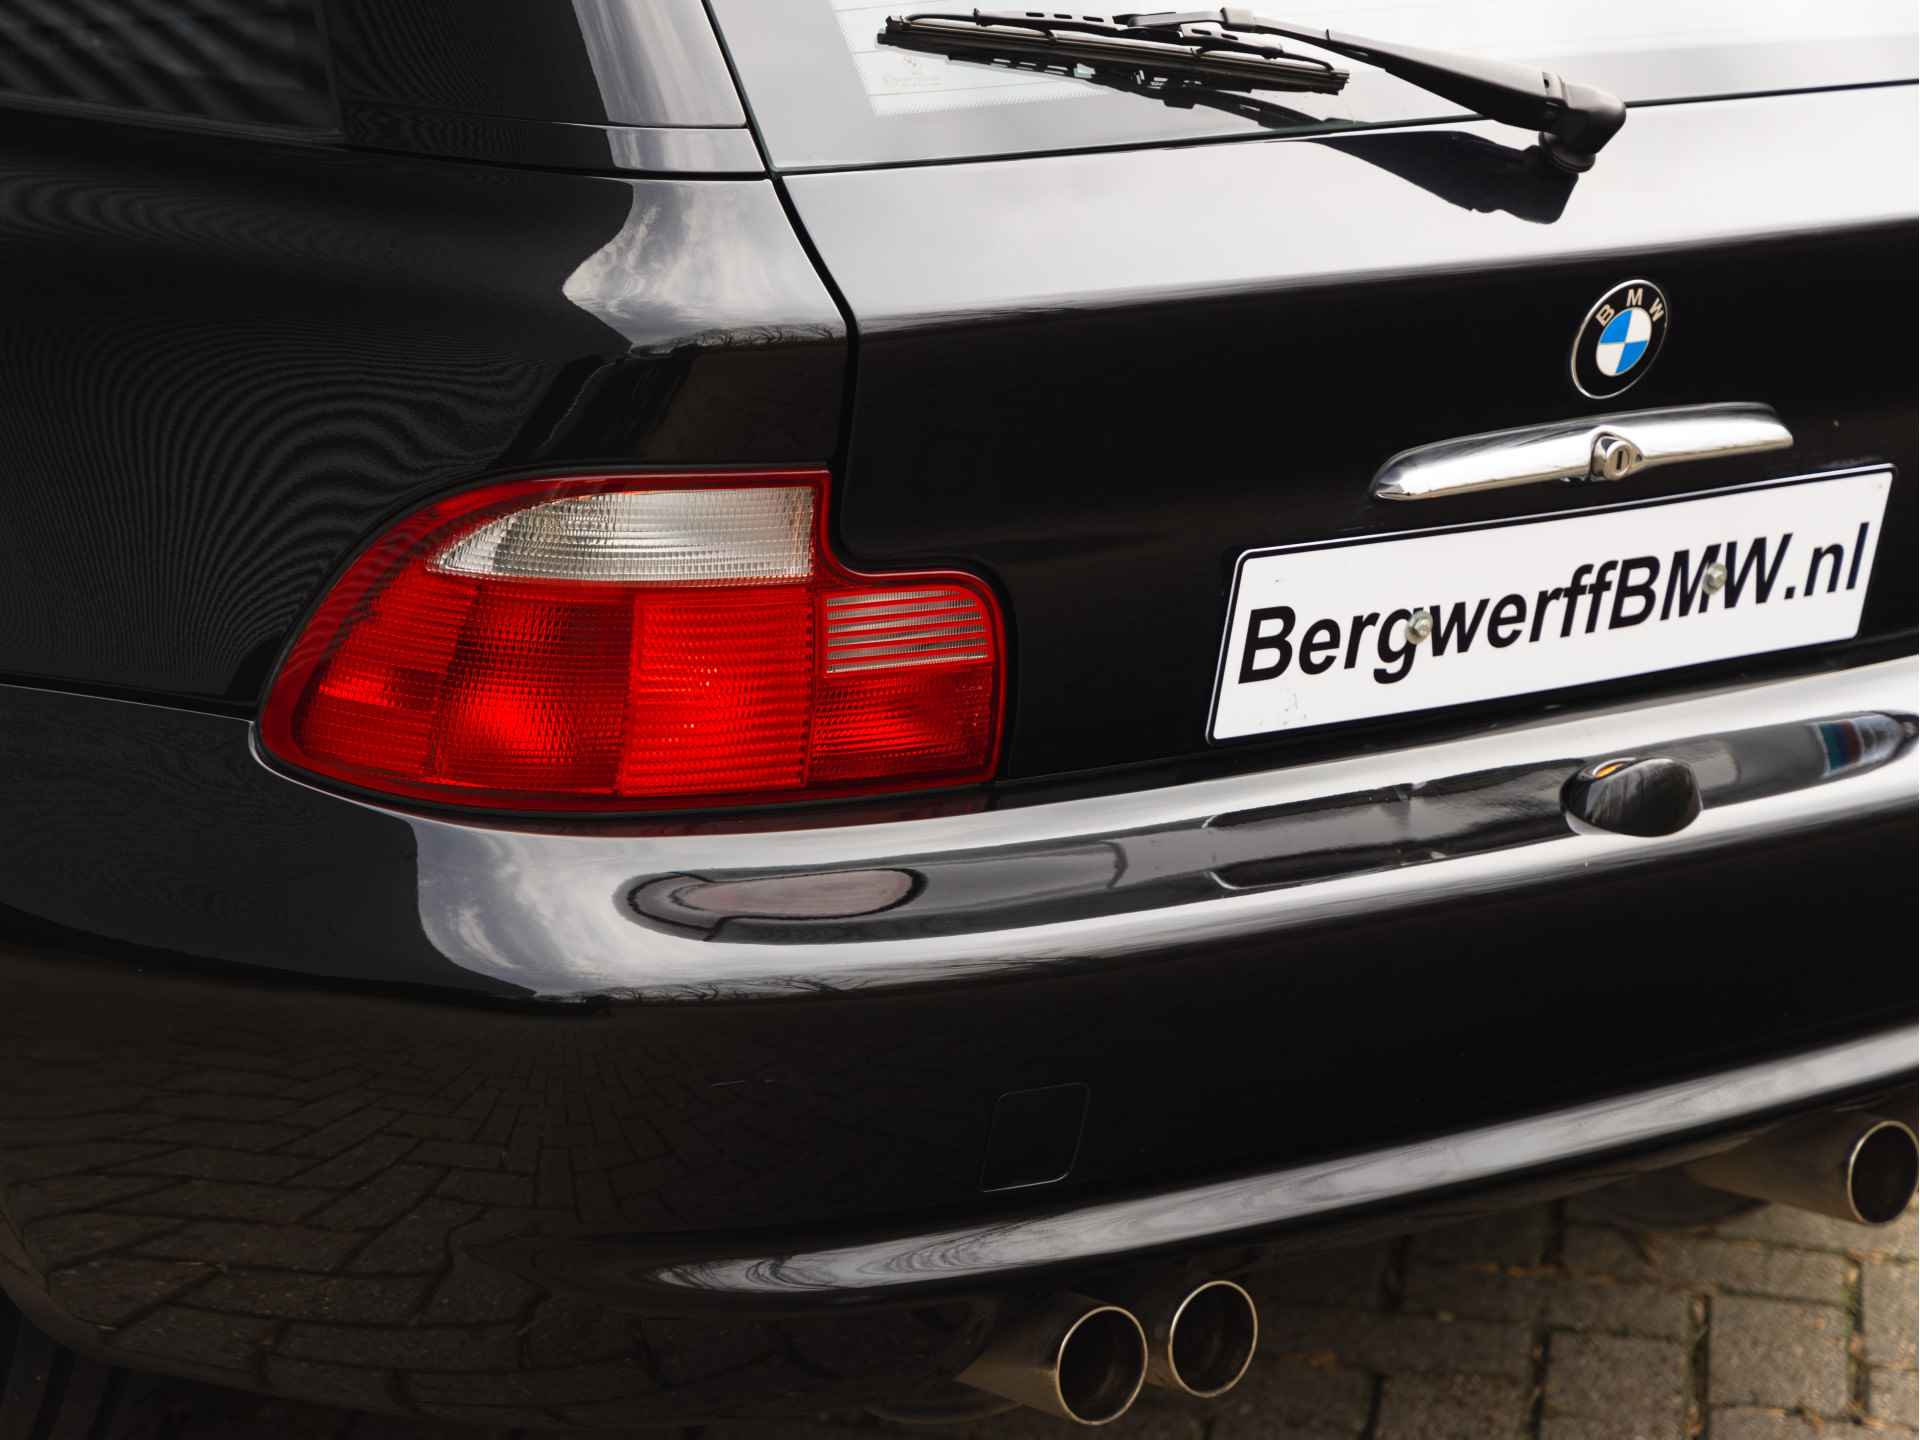 BMW Z3 M Coupé 3.2 M - S54 - 1 of 269 - 8/29